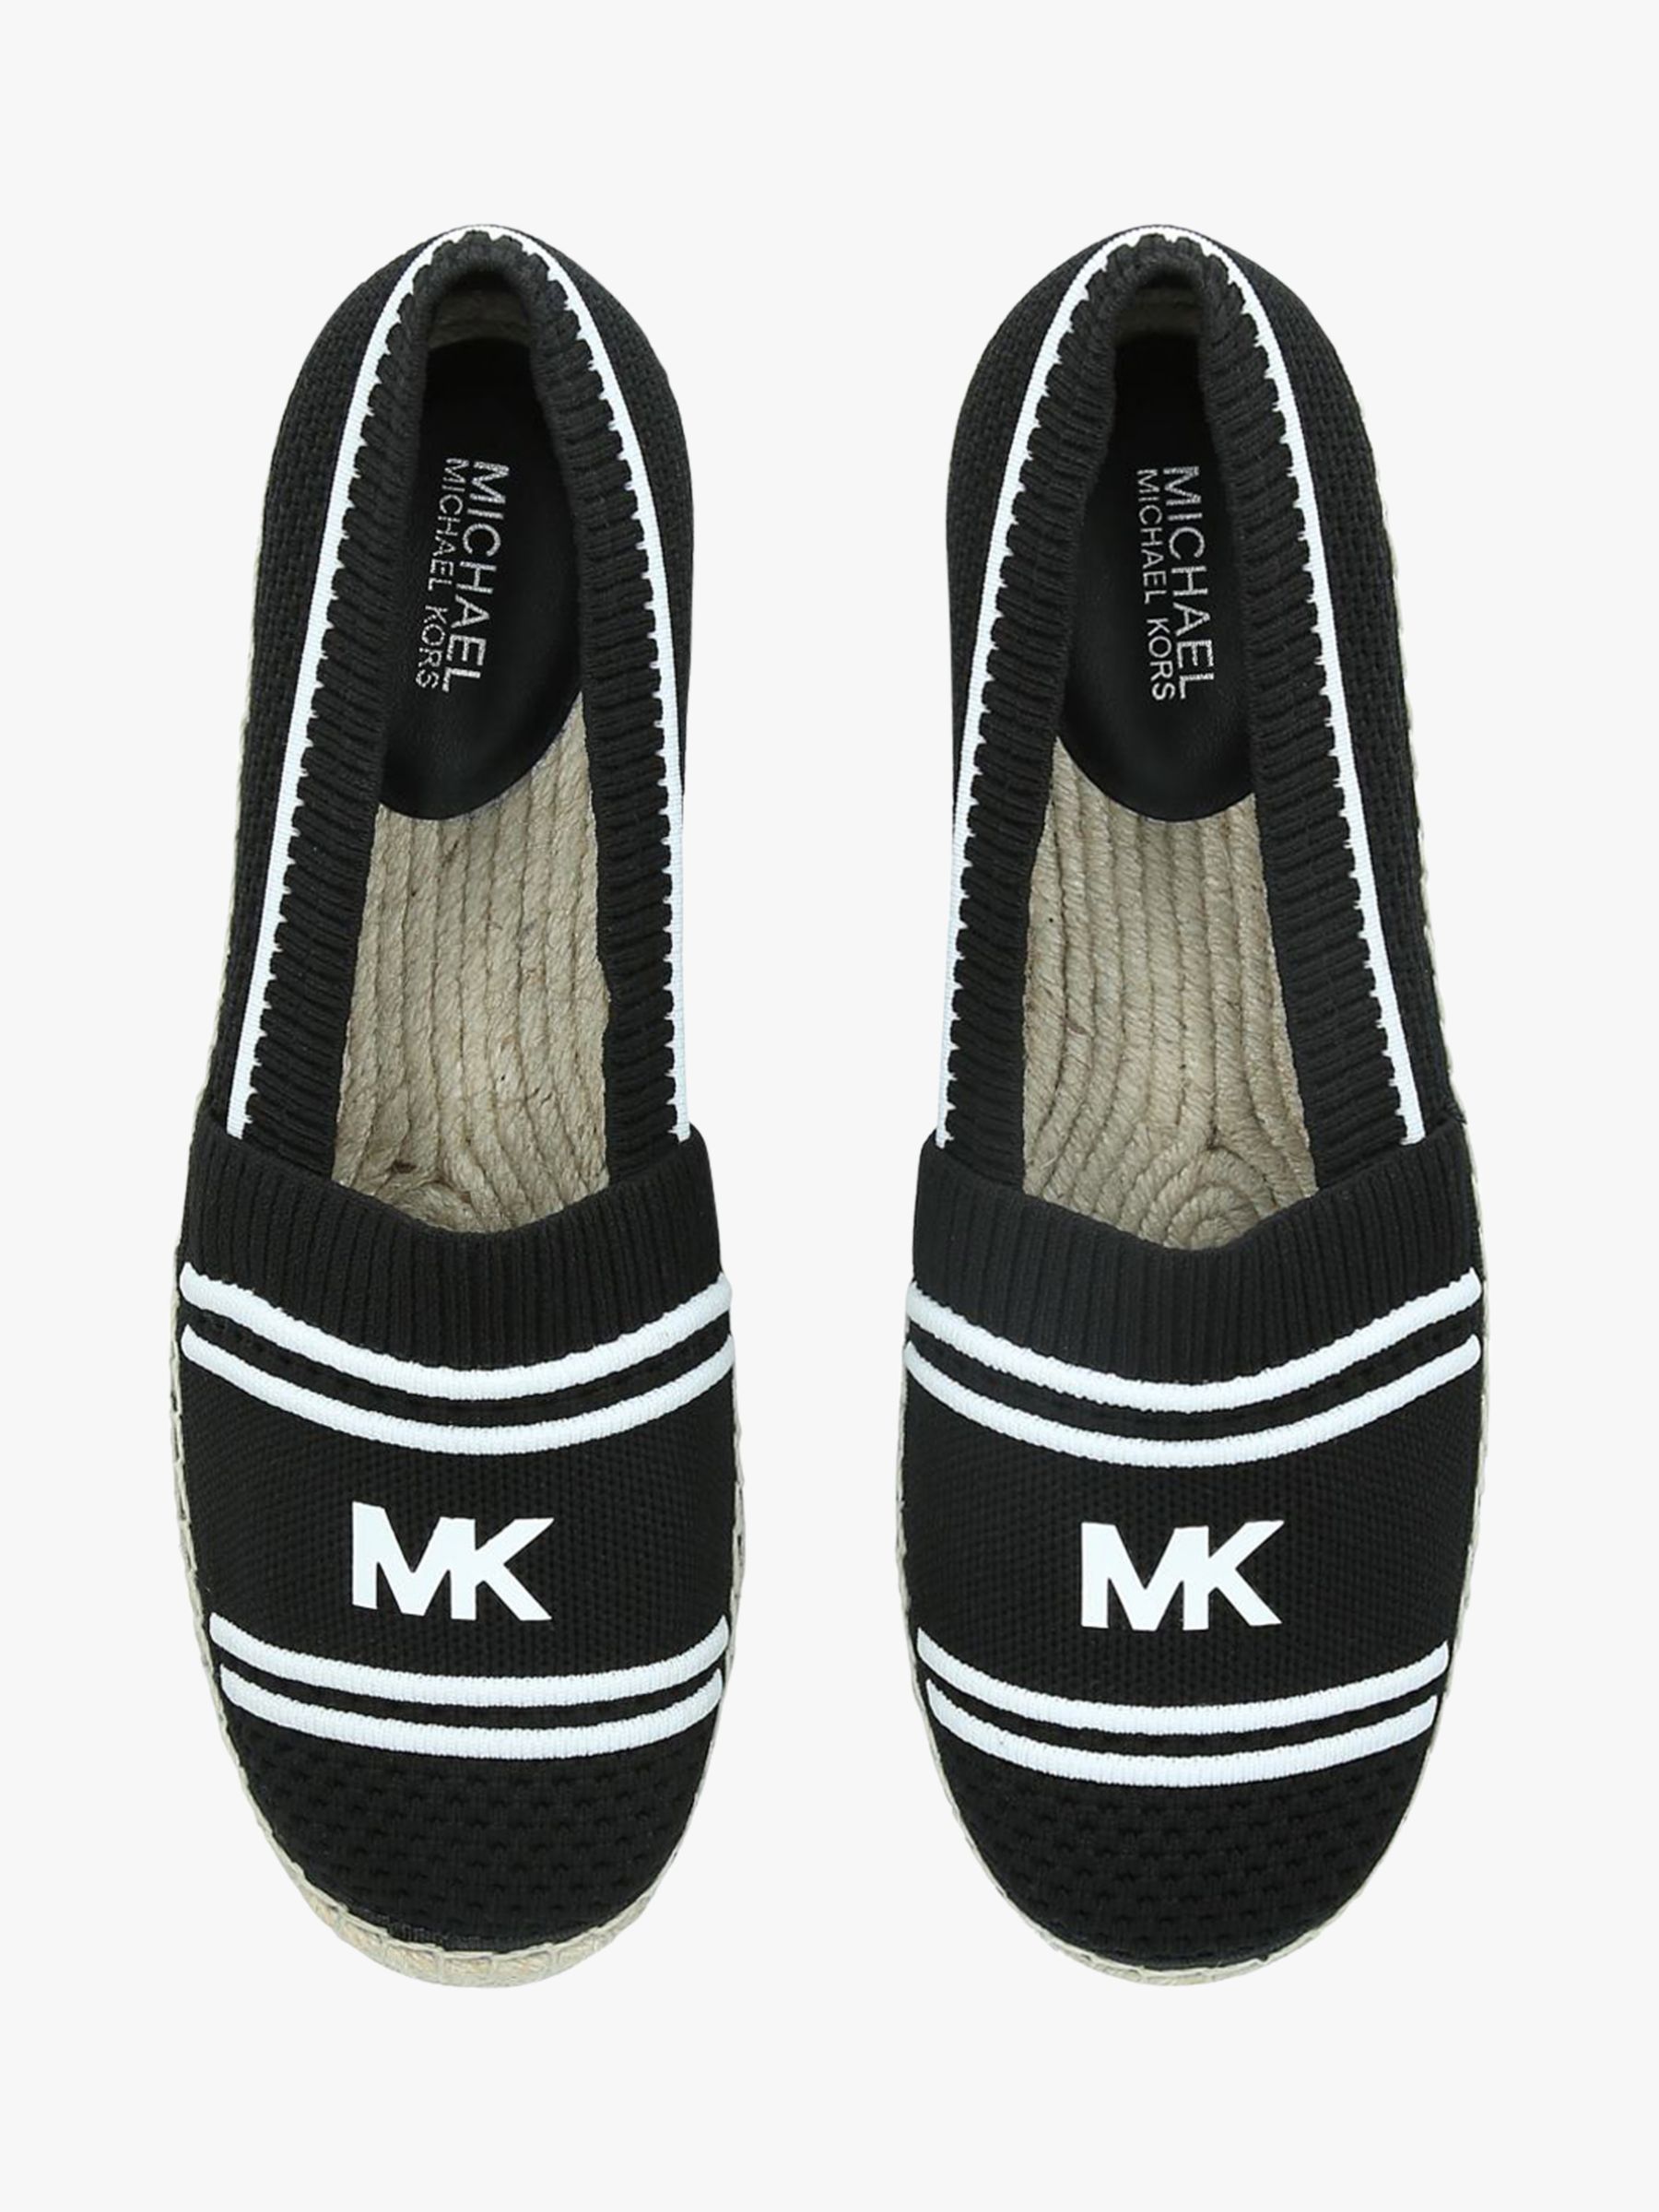 mk espadrilles black